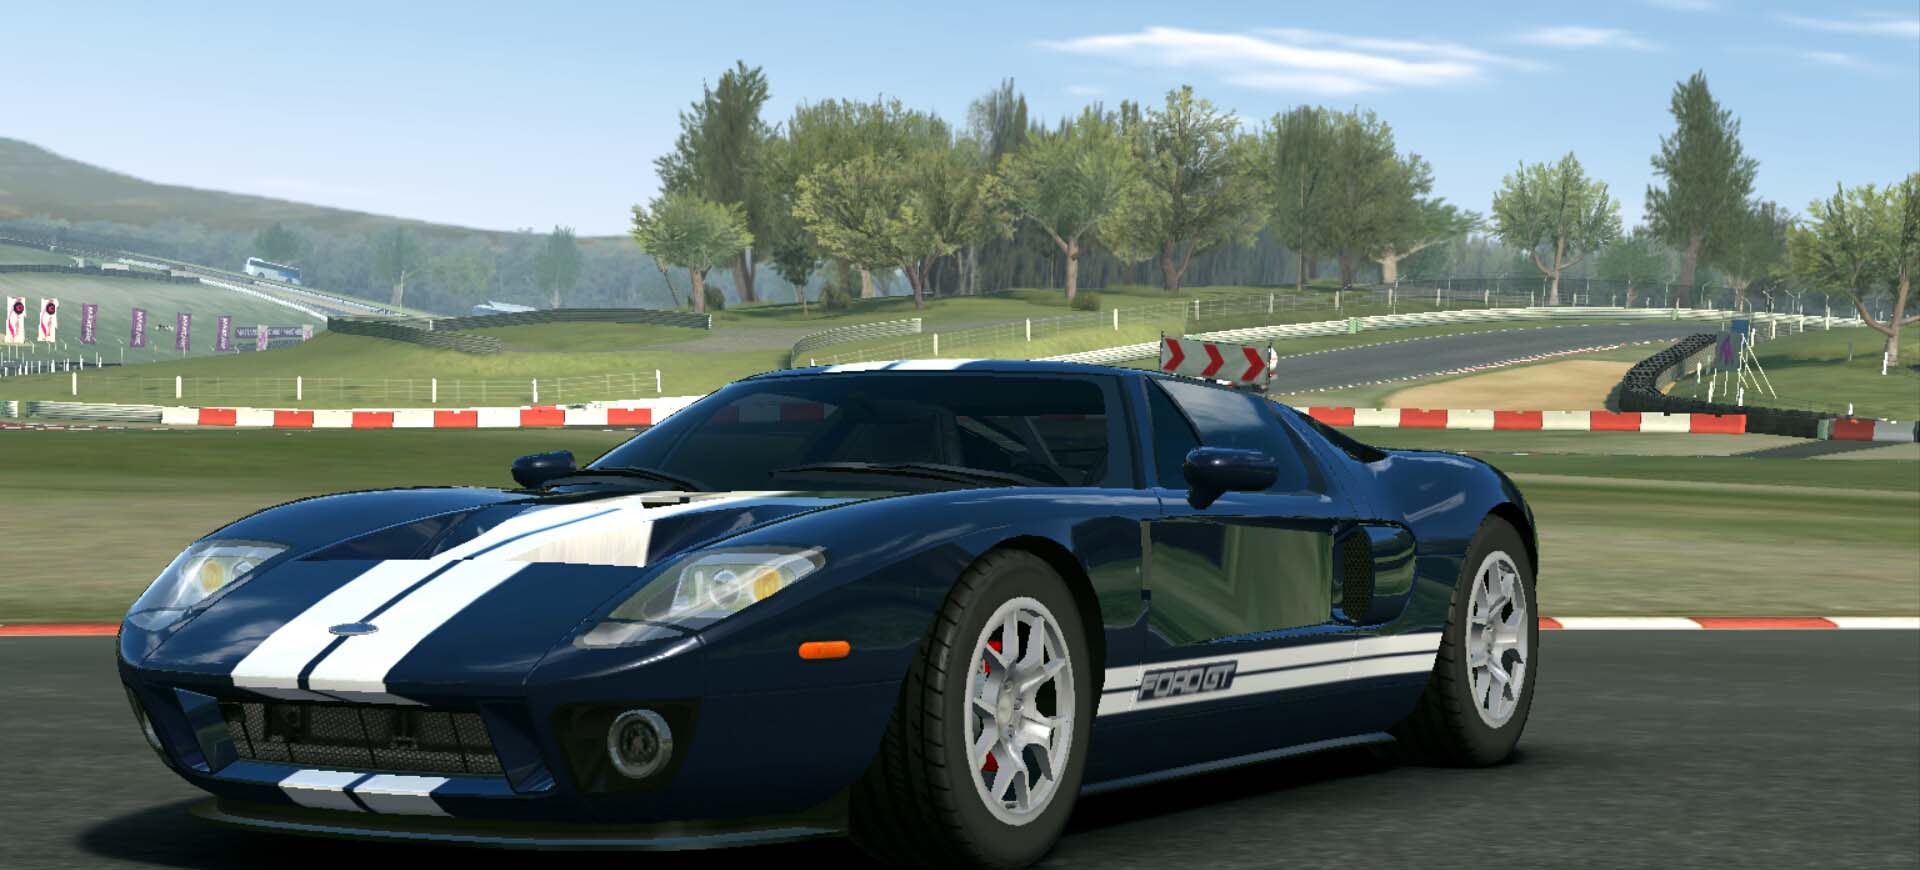 Real Racing 3 tung ra bản nhập mới – Tin Game Mobile